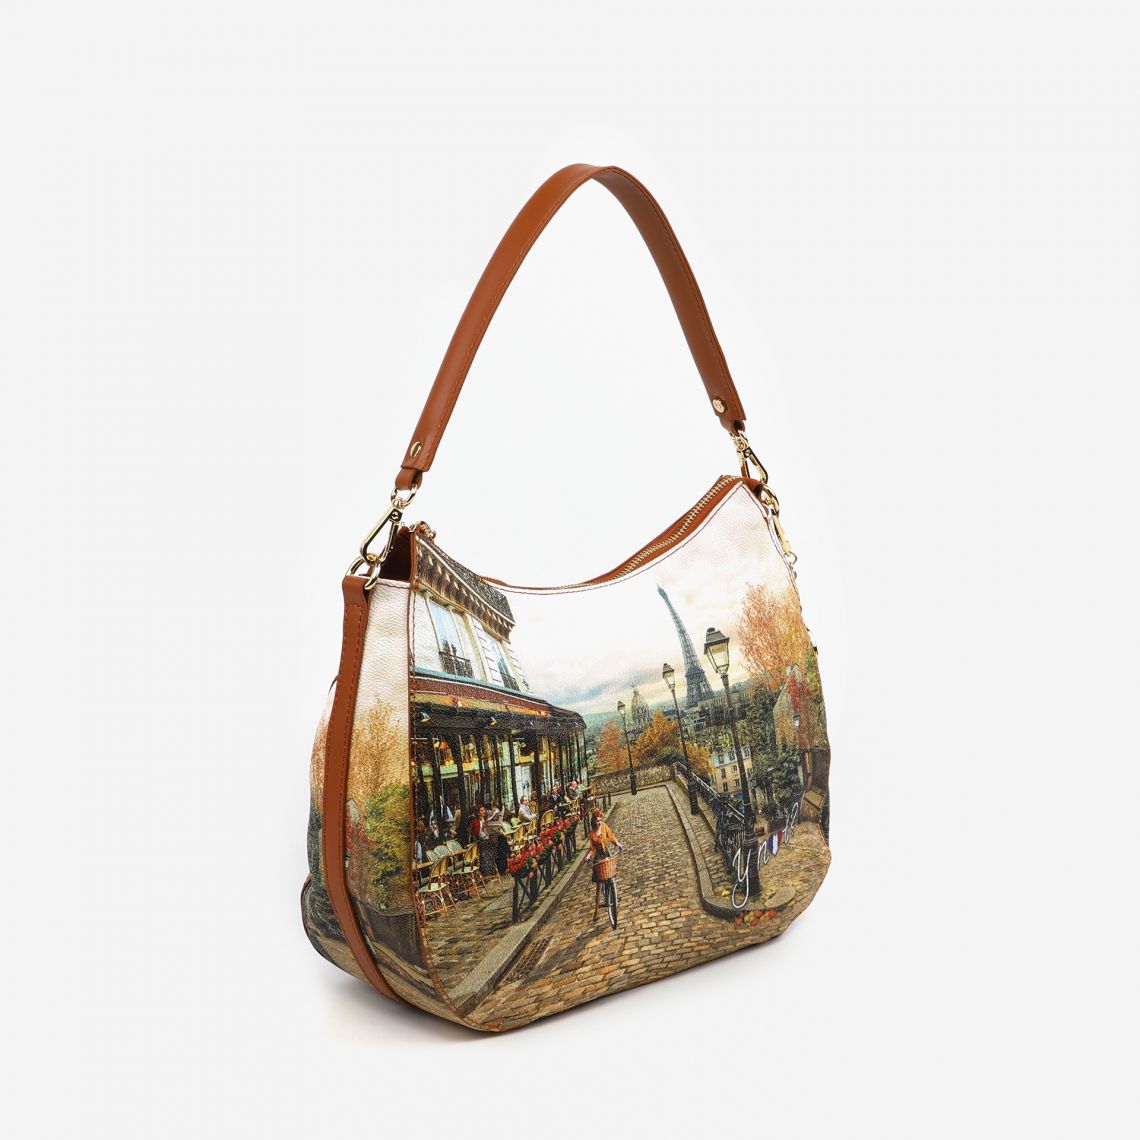 Economici Online Hobo Romantic Paris borse bag in offerta